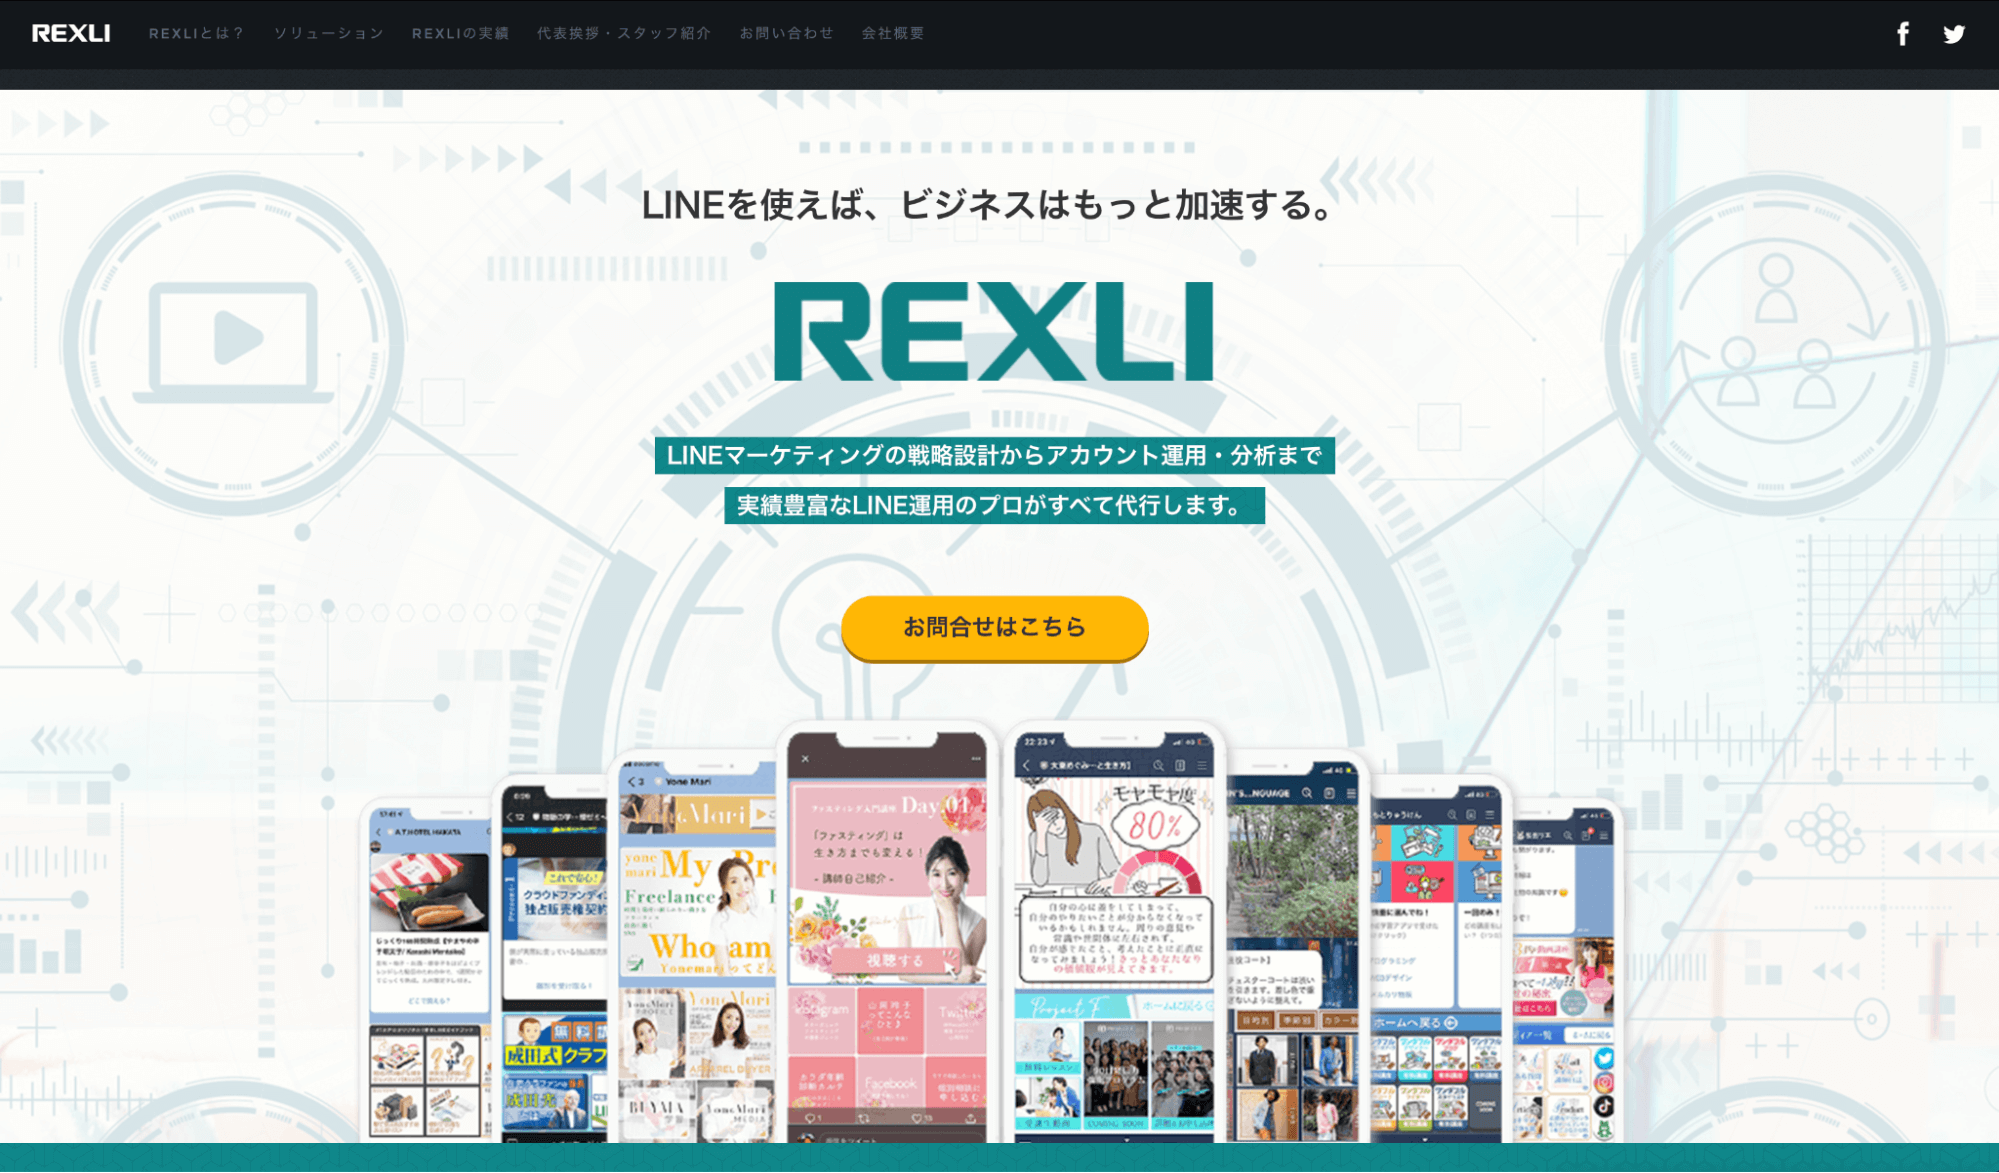 REXLI様のホームページトップ画面